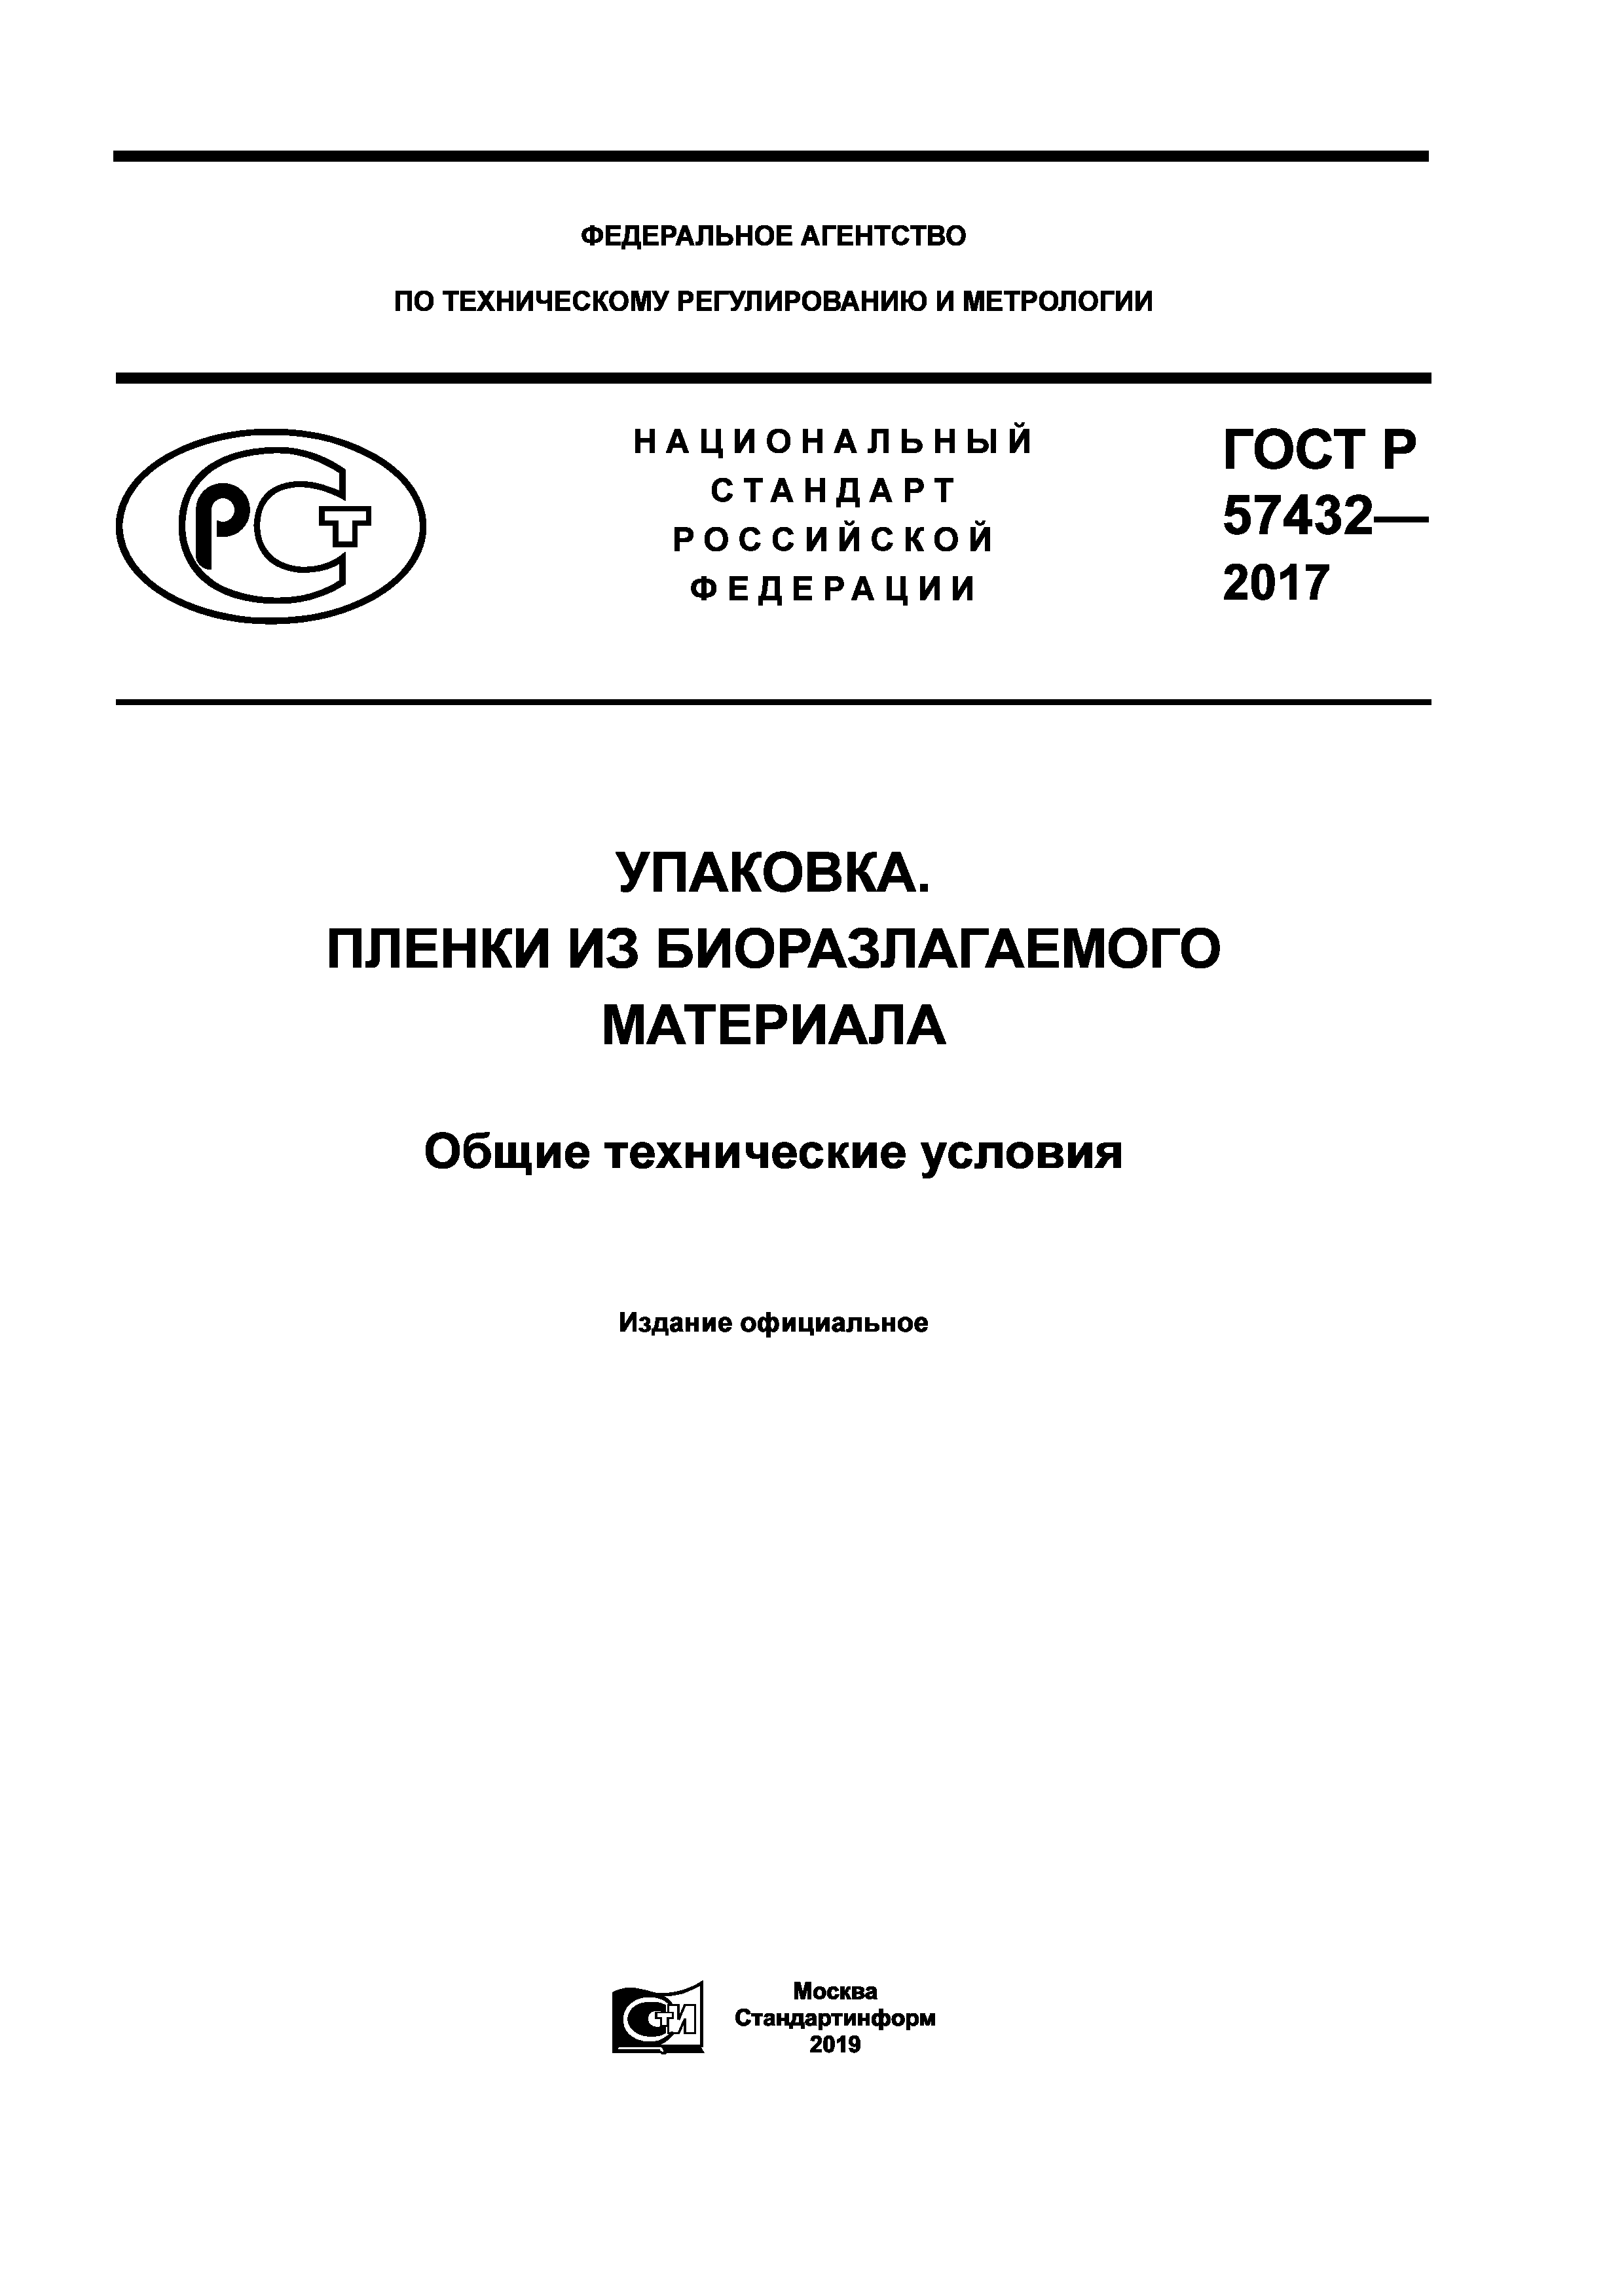 ГОСТ Р 57432-2017